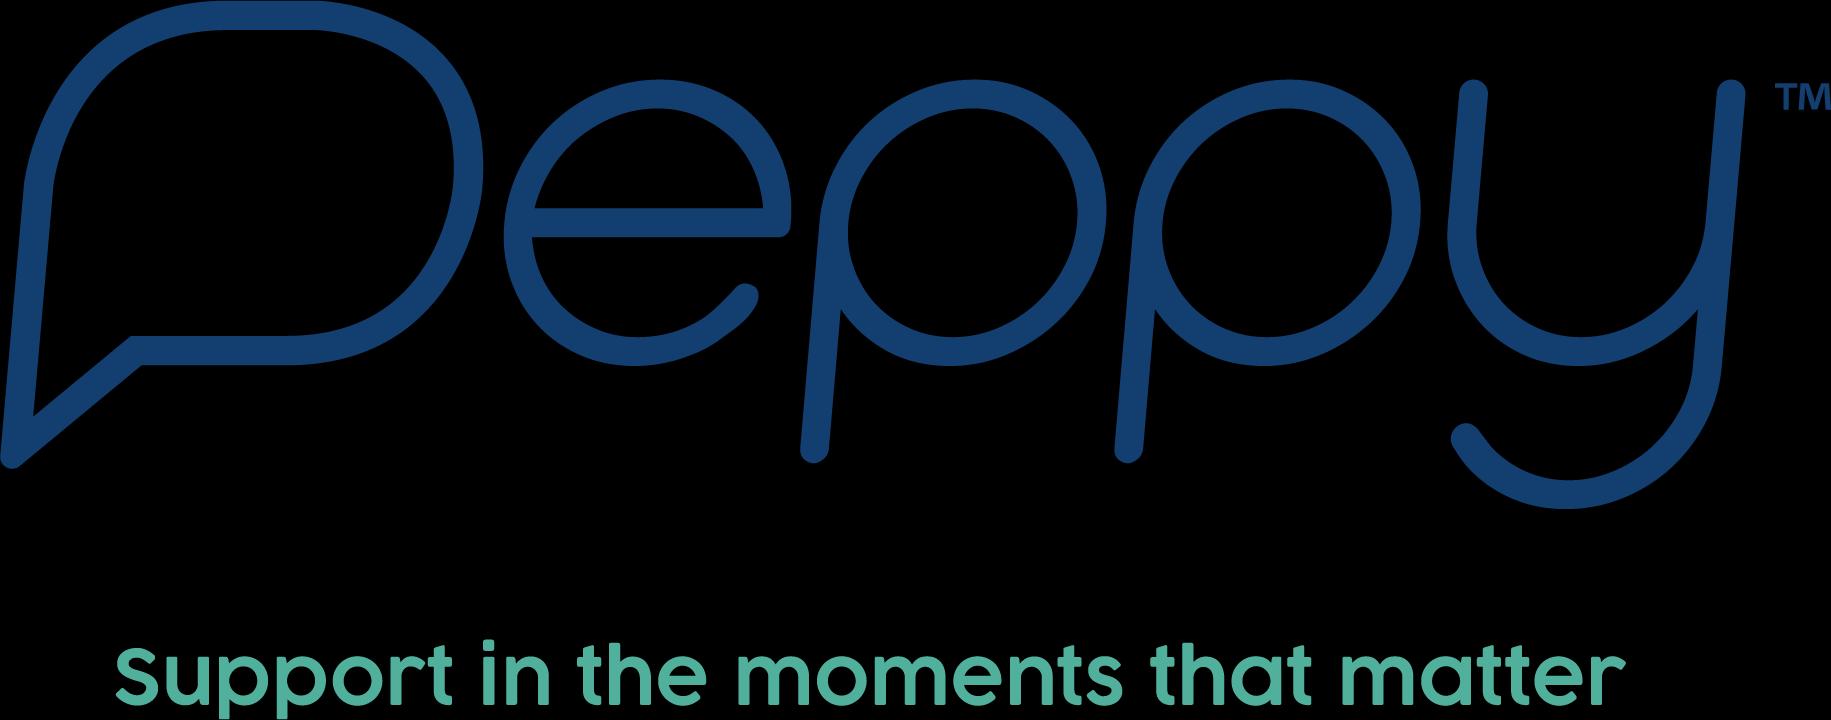 Peppy_logo